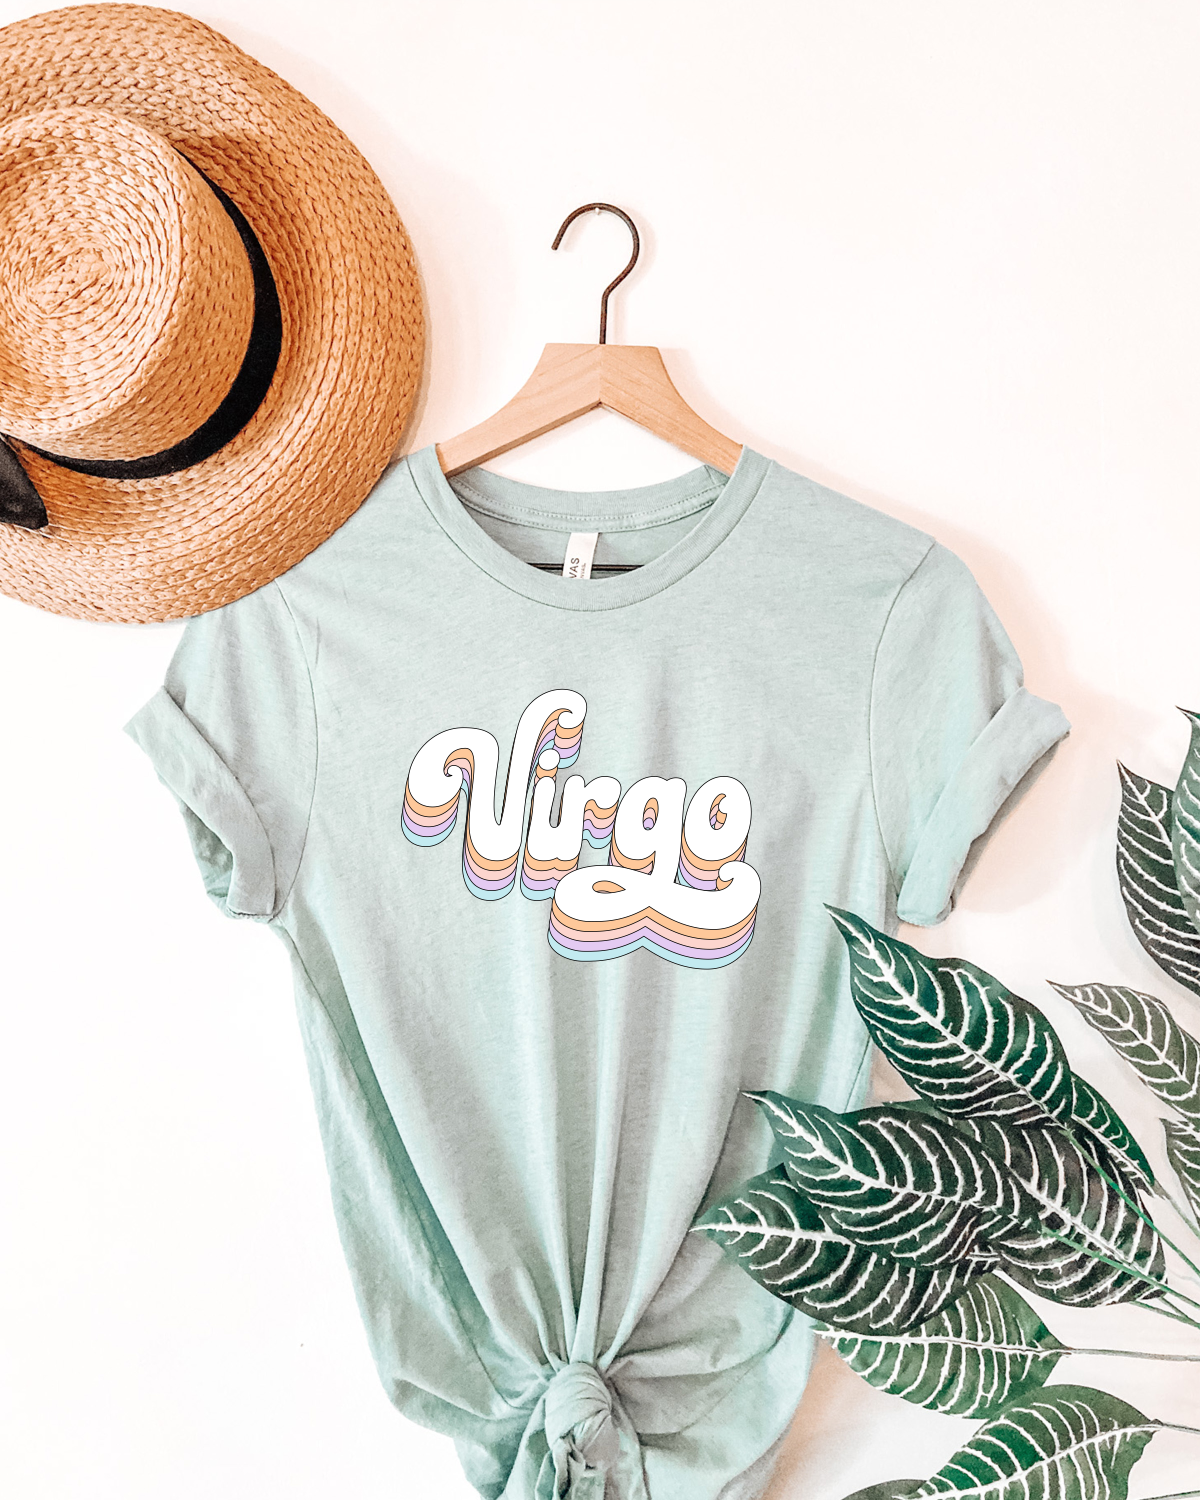 Virgo Astrology Shirt